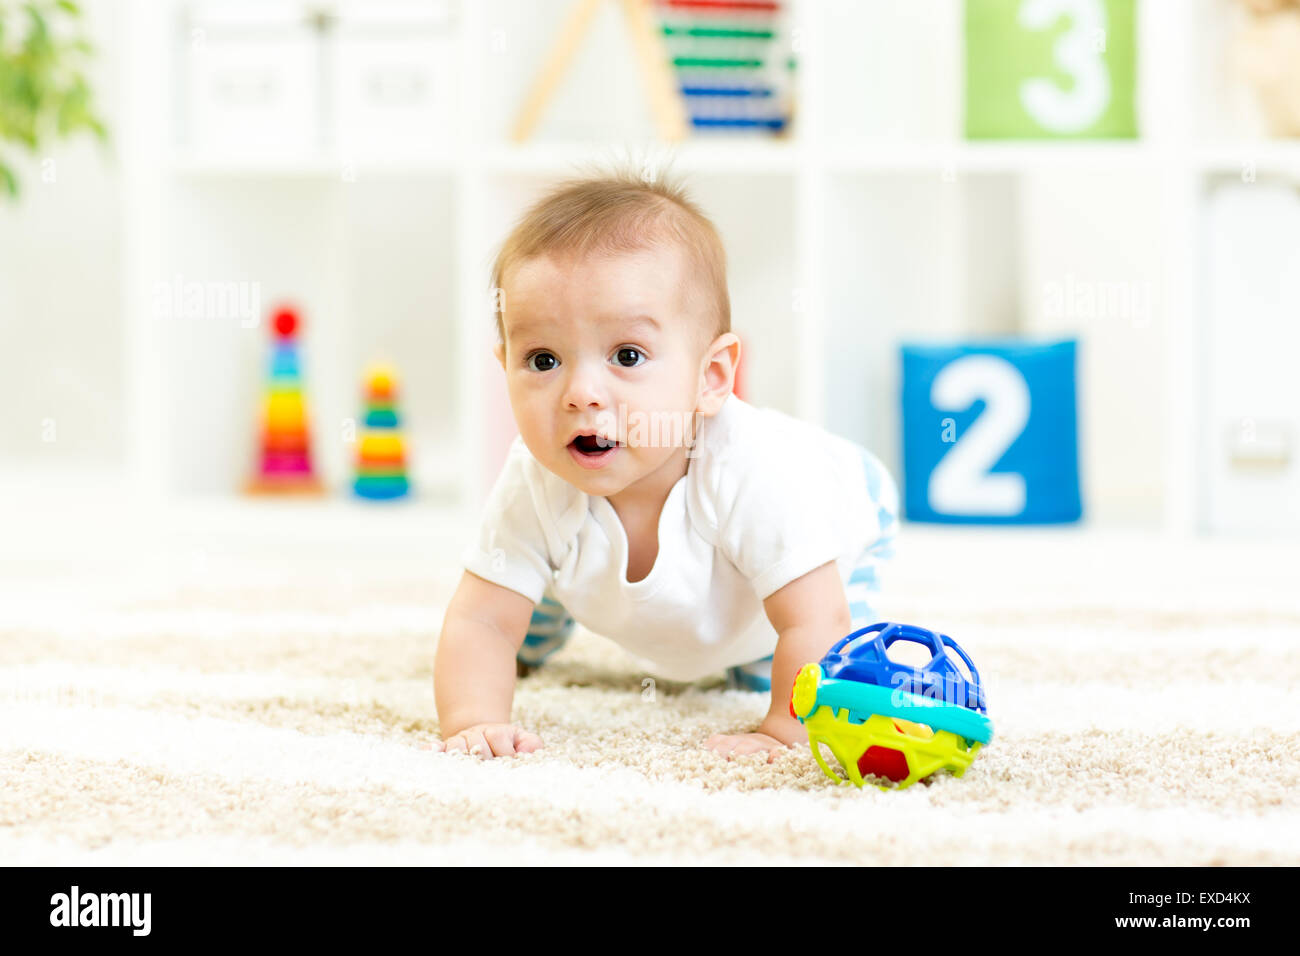 crawling funny baby boy indoors at nursery Stock Photo